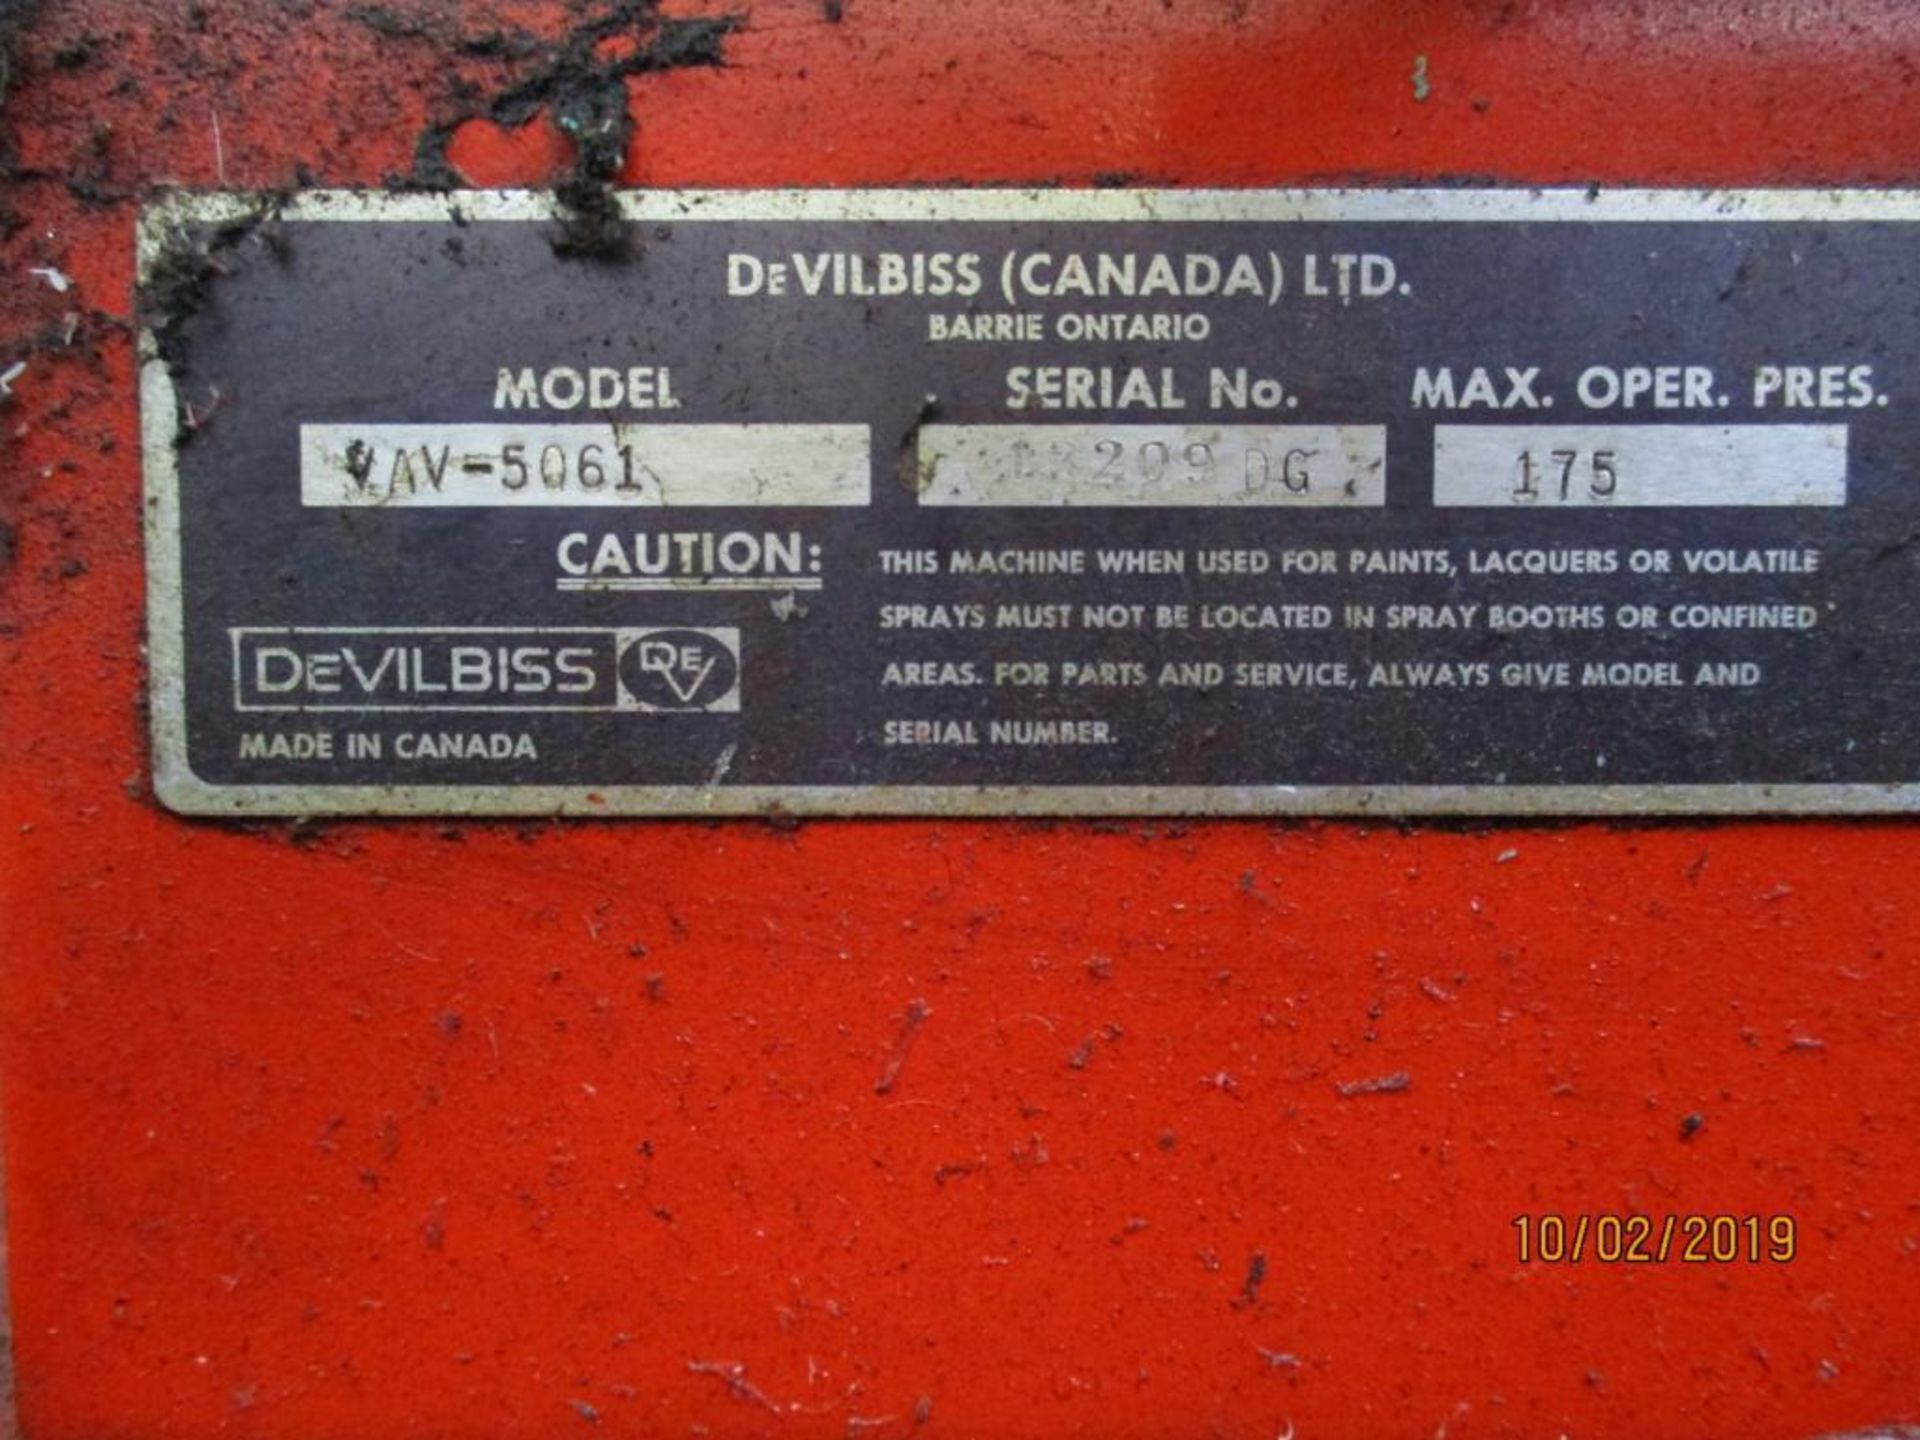 Devilbiss 15HP AV-5061 Two Stage Air Compressor S/N 13209DG, 175psi Max Pressure, Mounted on Horizon - Image 4 of 4